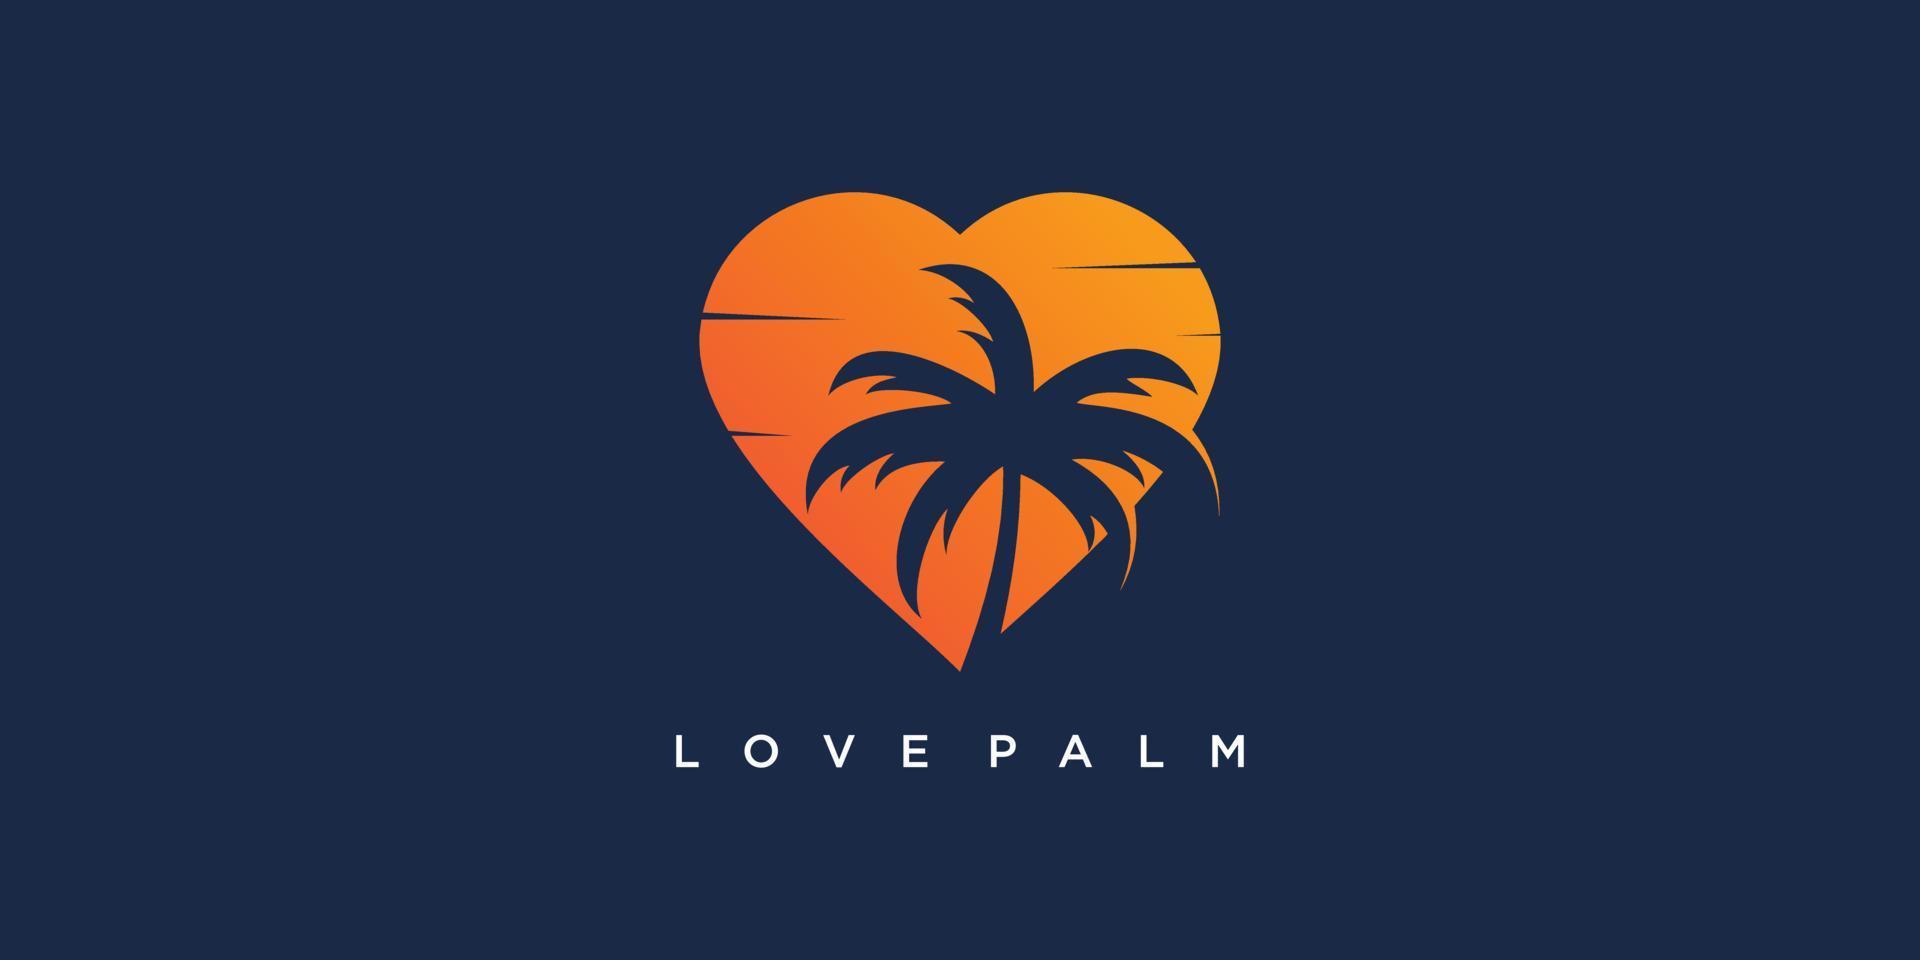 Palm logo design with creative love concept Premium Vector